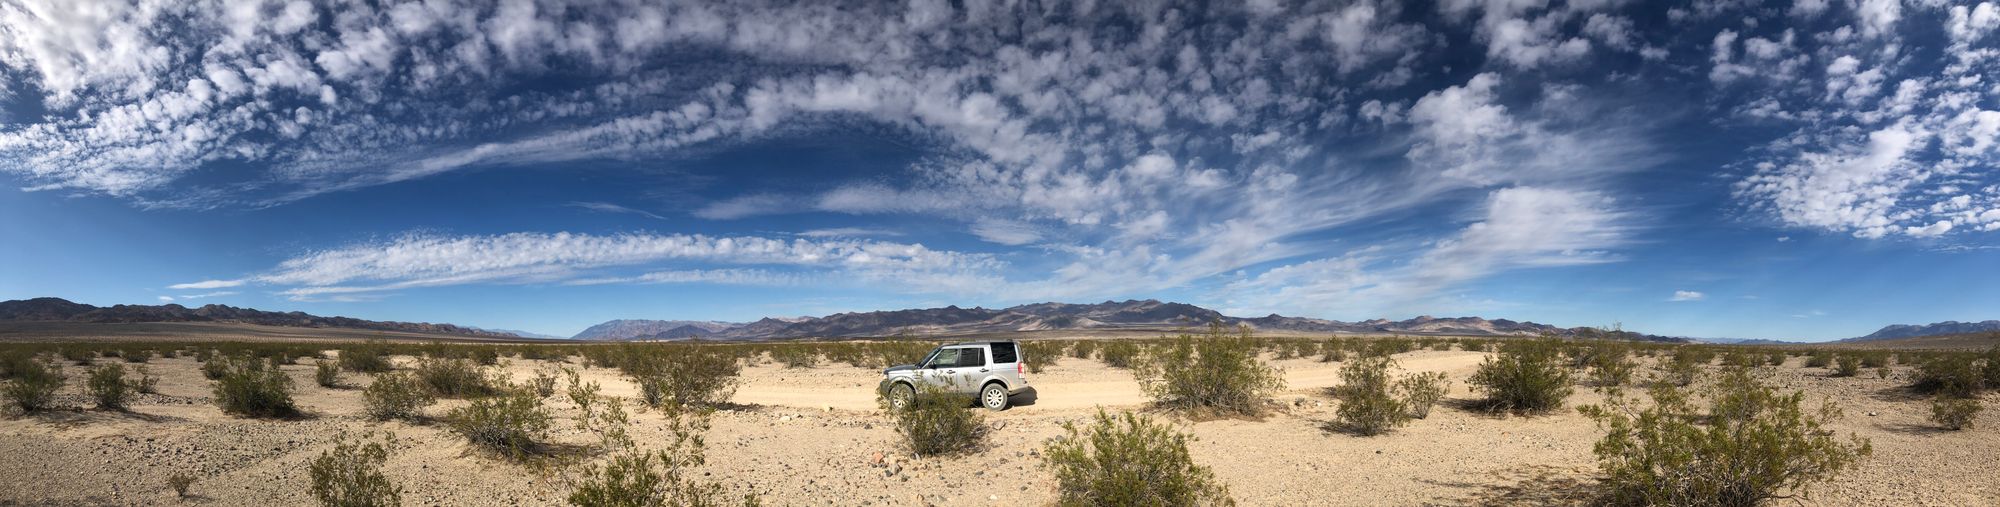 1800 mile 5 desert solo overland trip (SoCal)